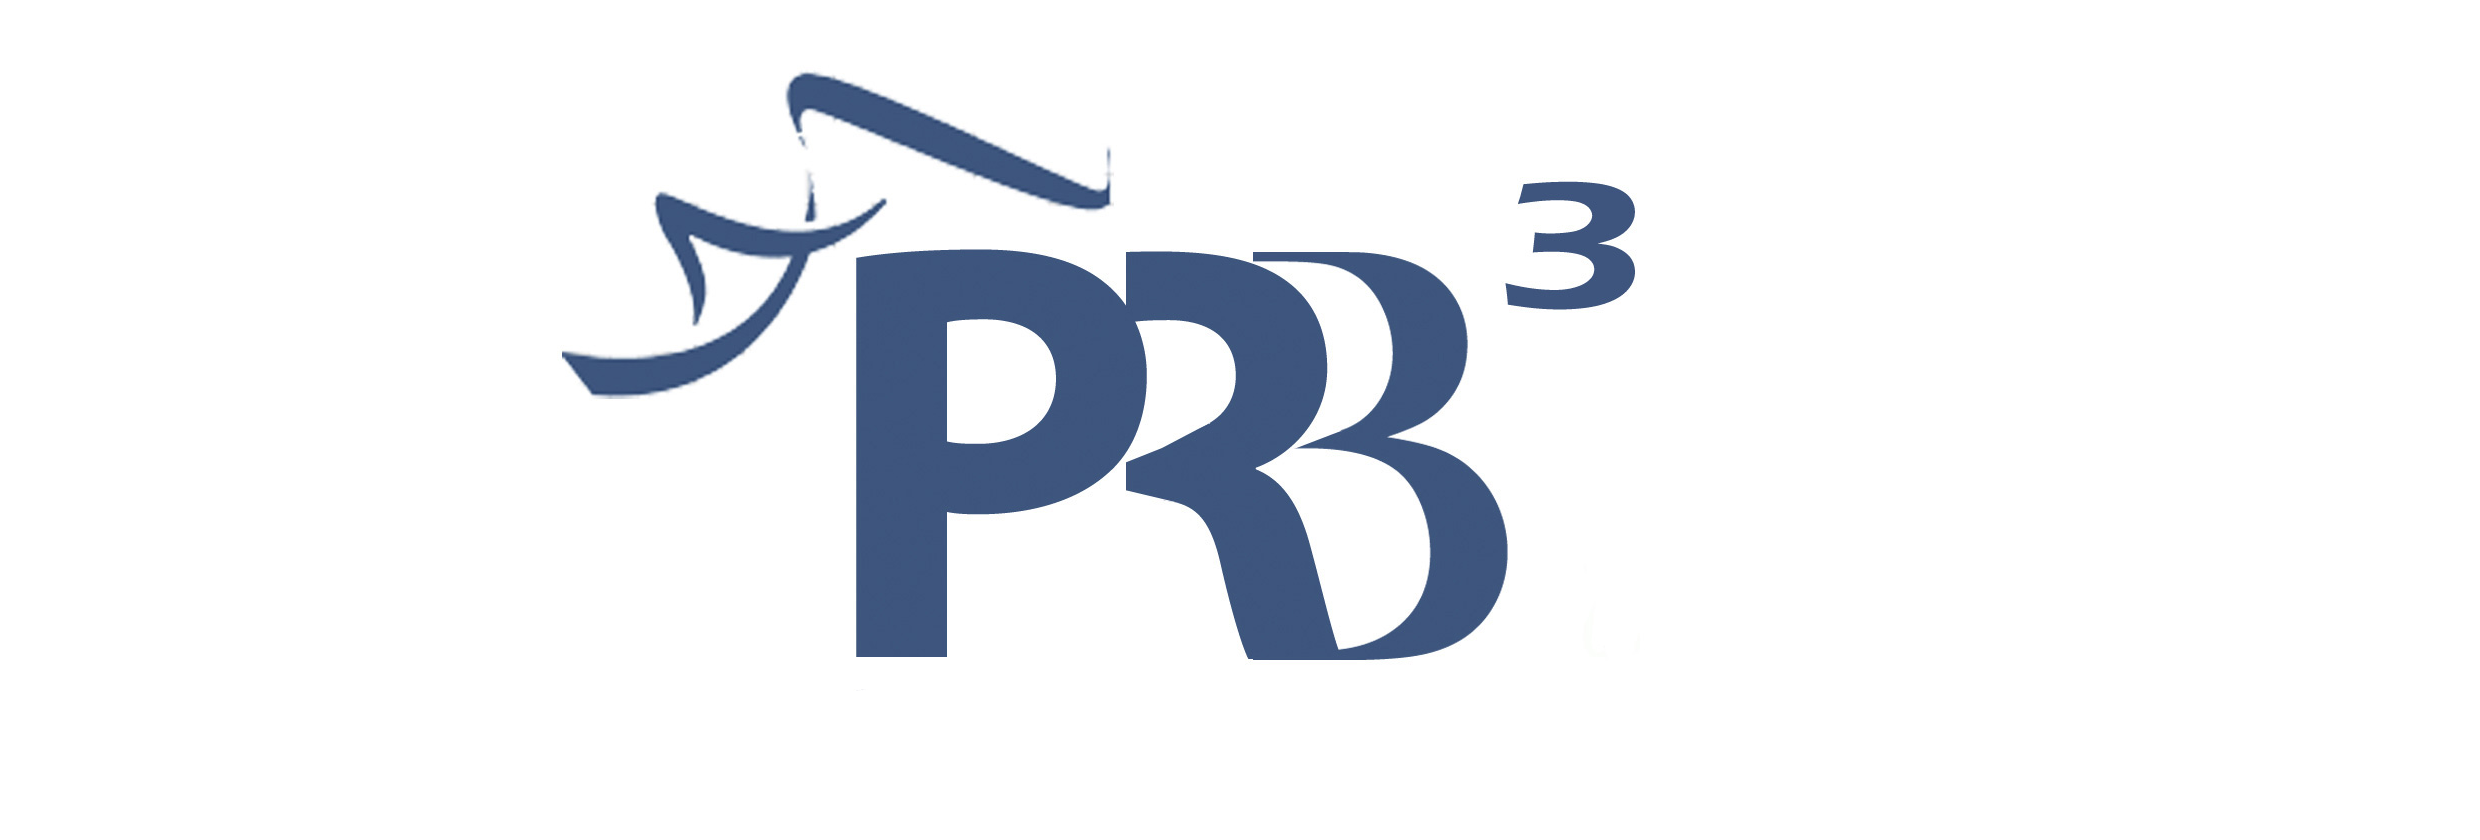 Logo PRB3